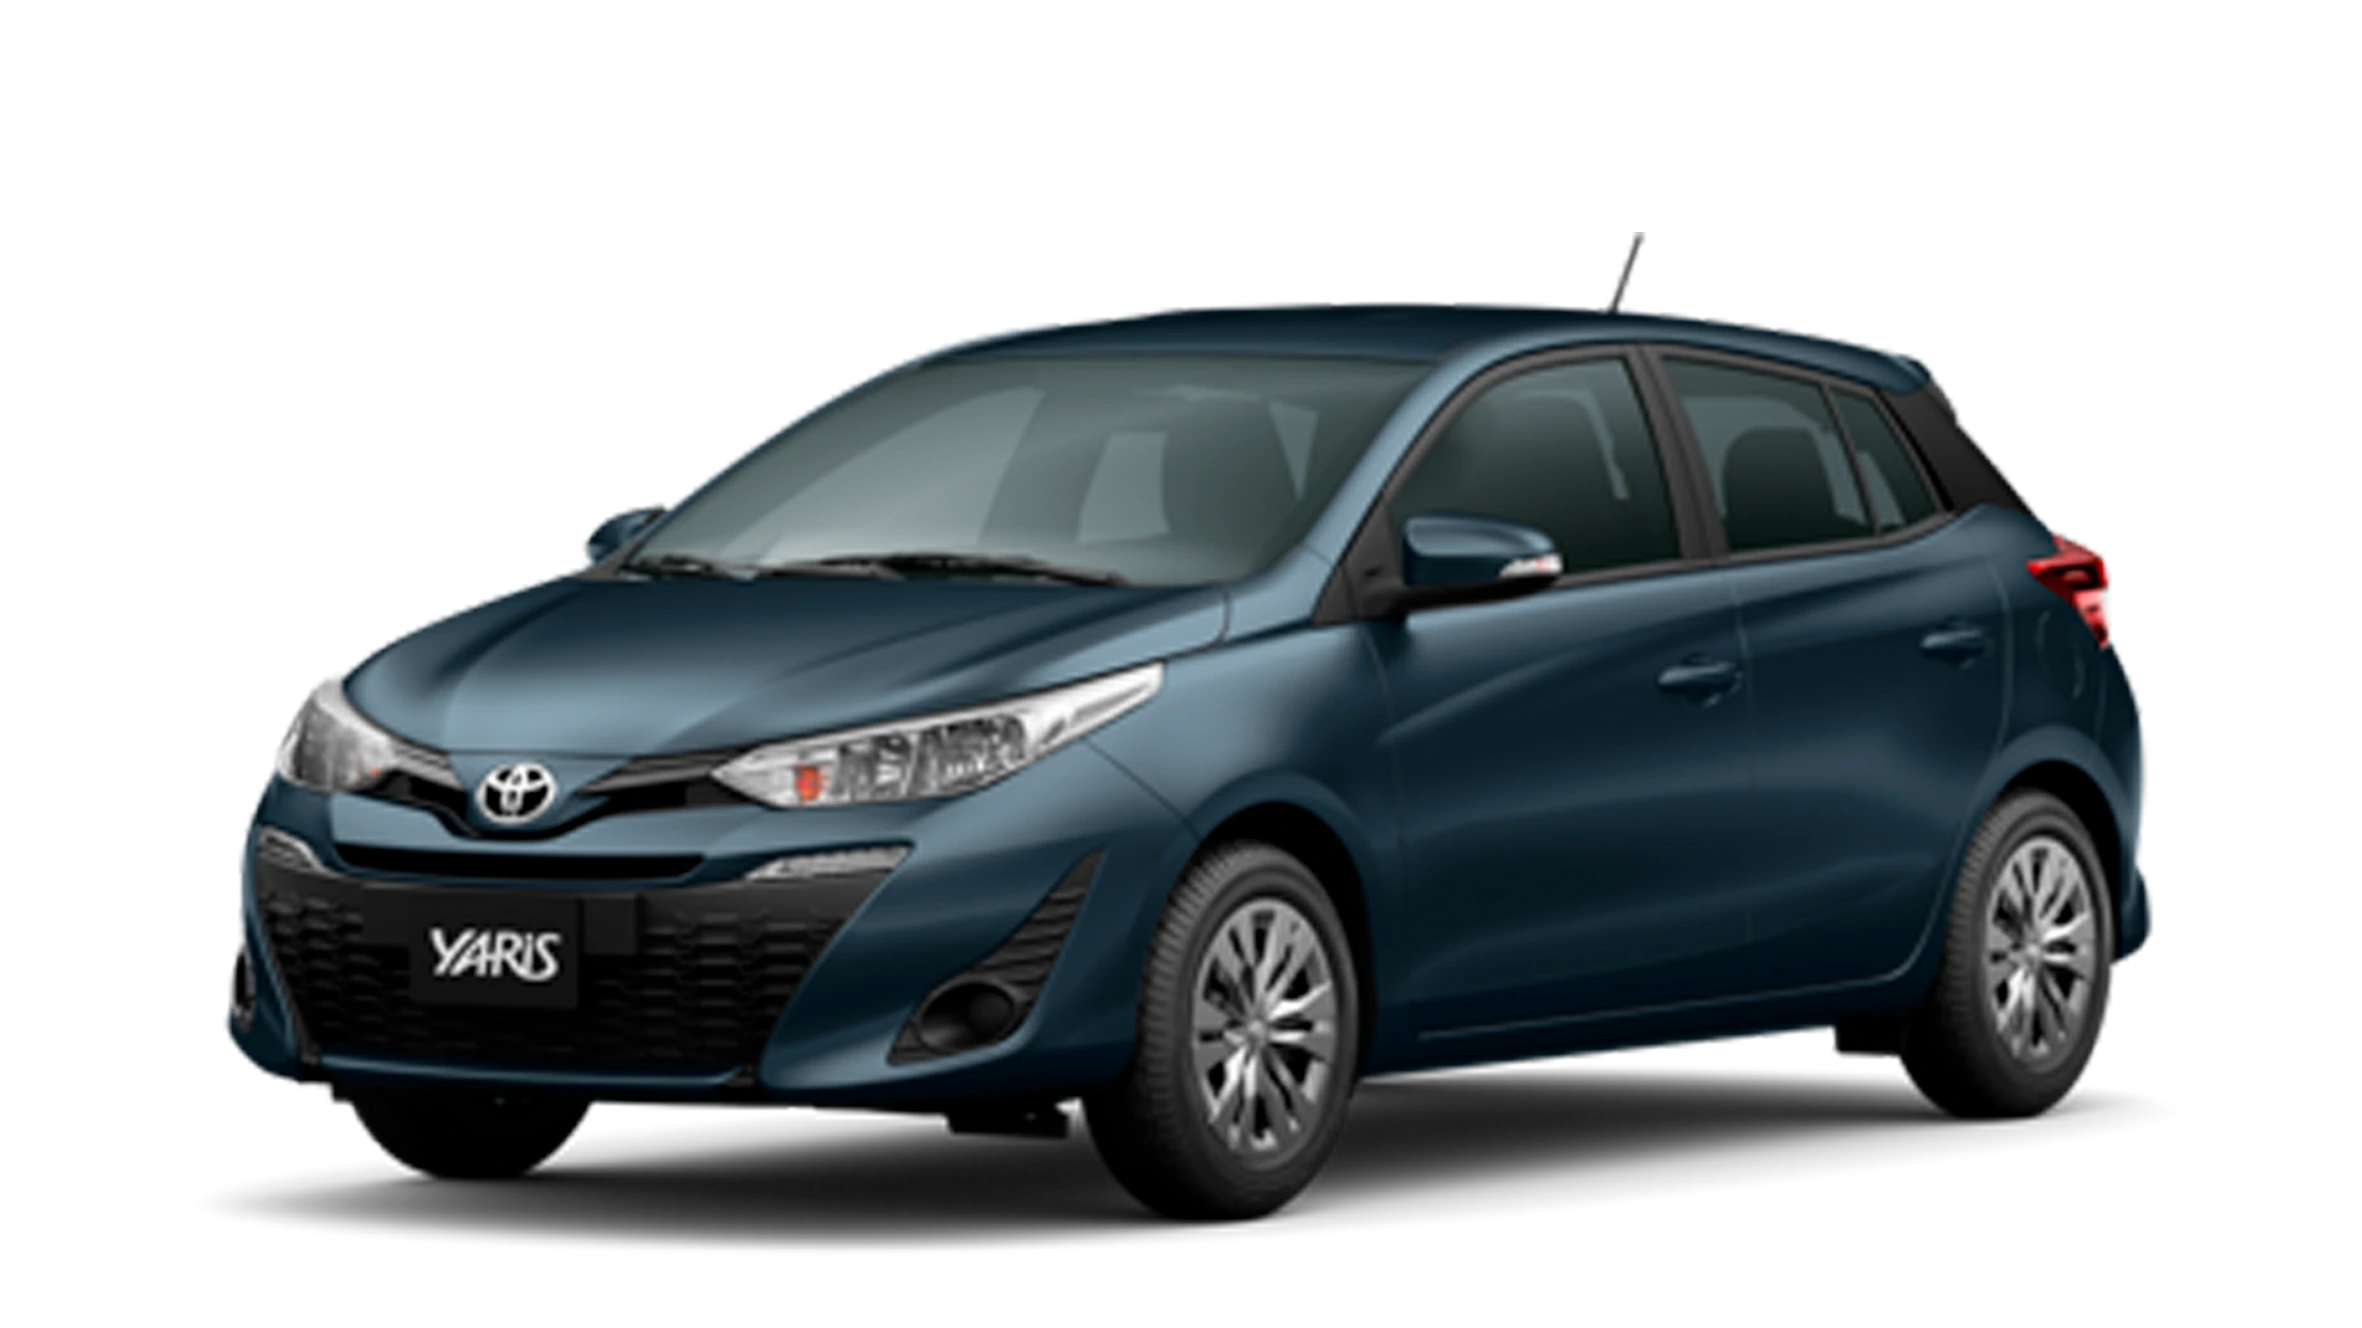 Comprar Sedan Toyota Corolla 2.0 16v 4P Flex Xei Direct Shift Automático  Cvt Preto Onix 2020 em Leme-SP